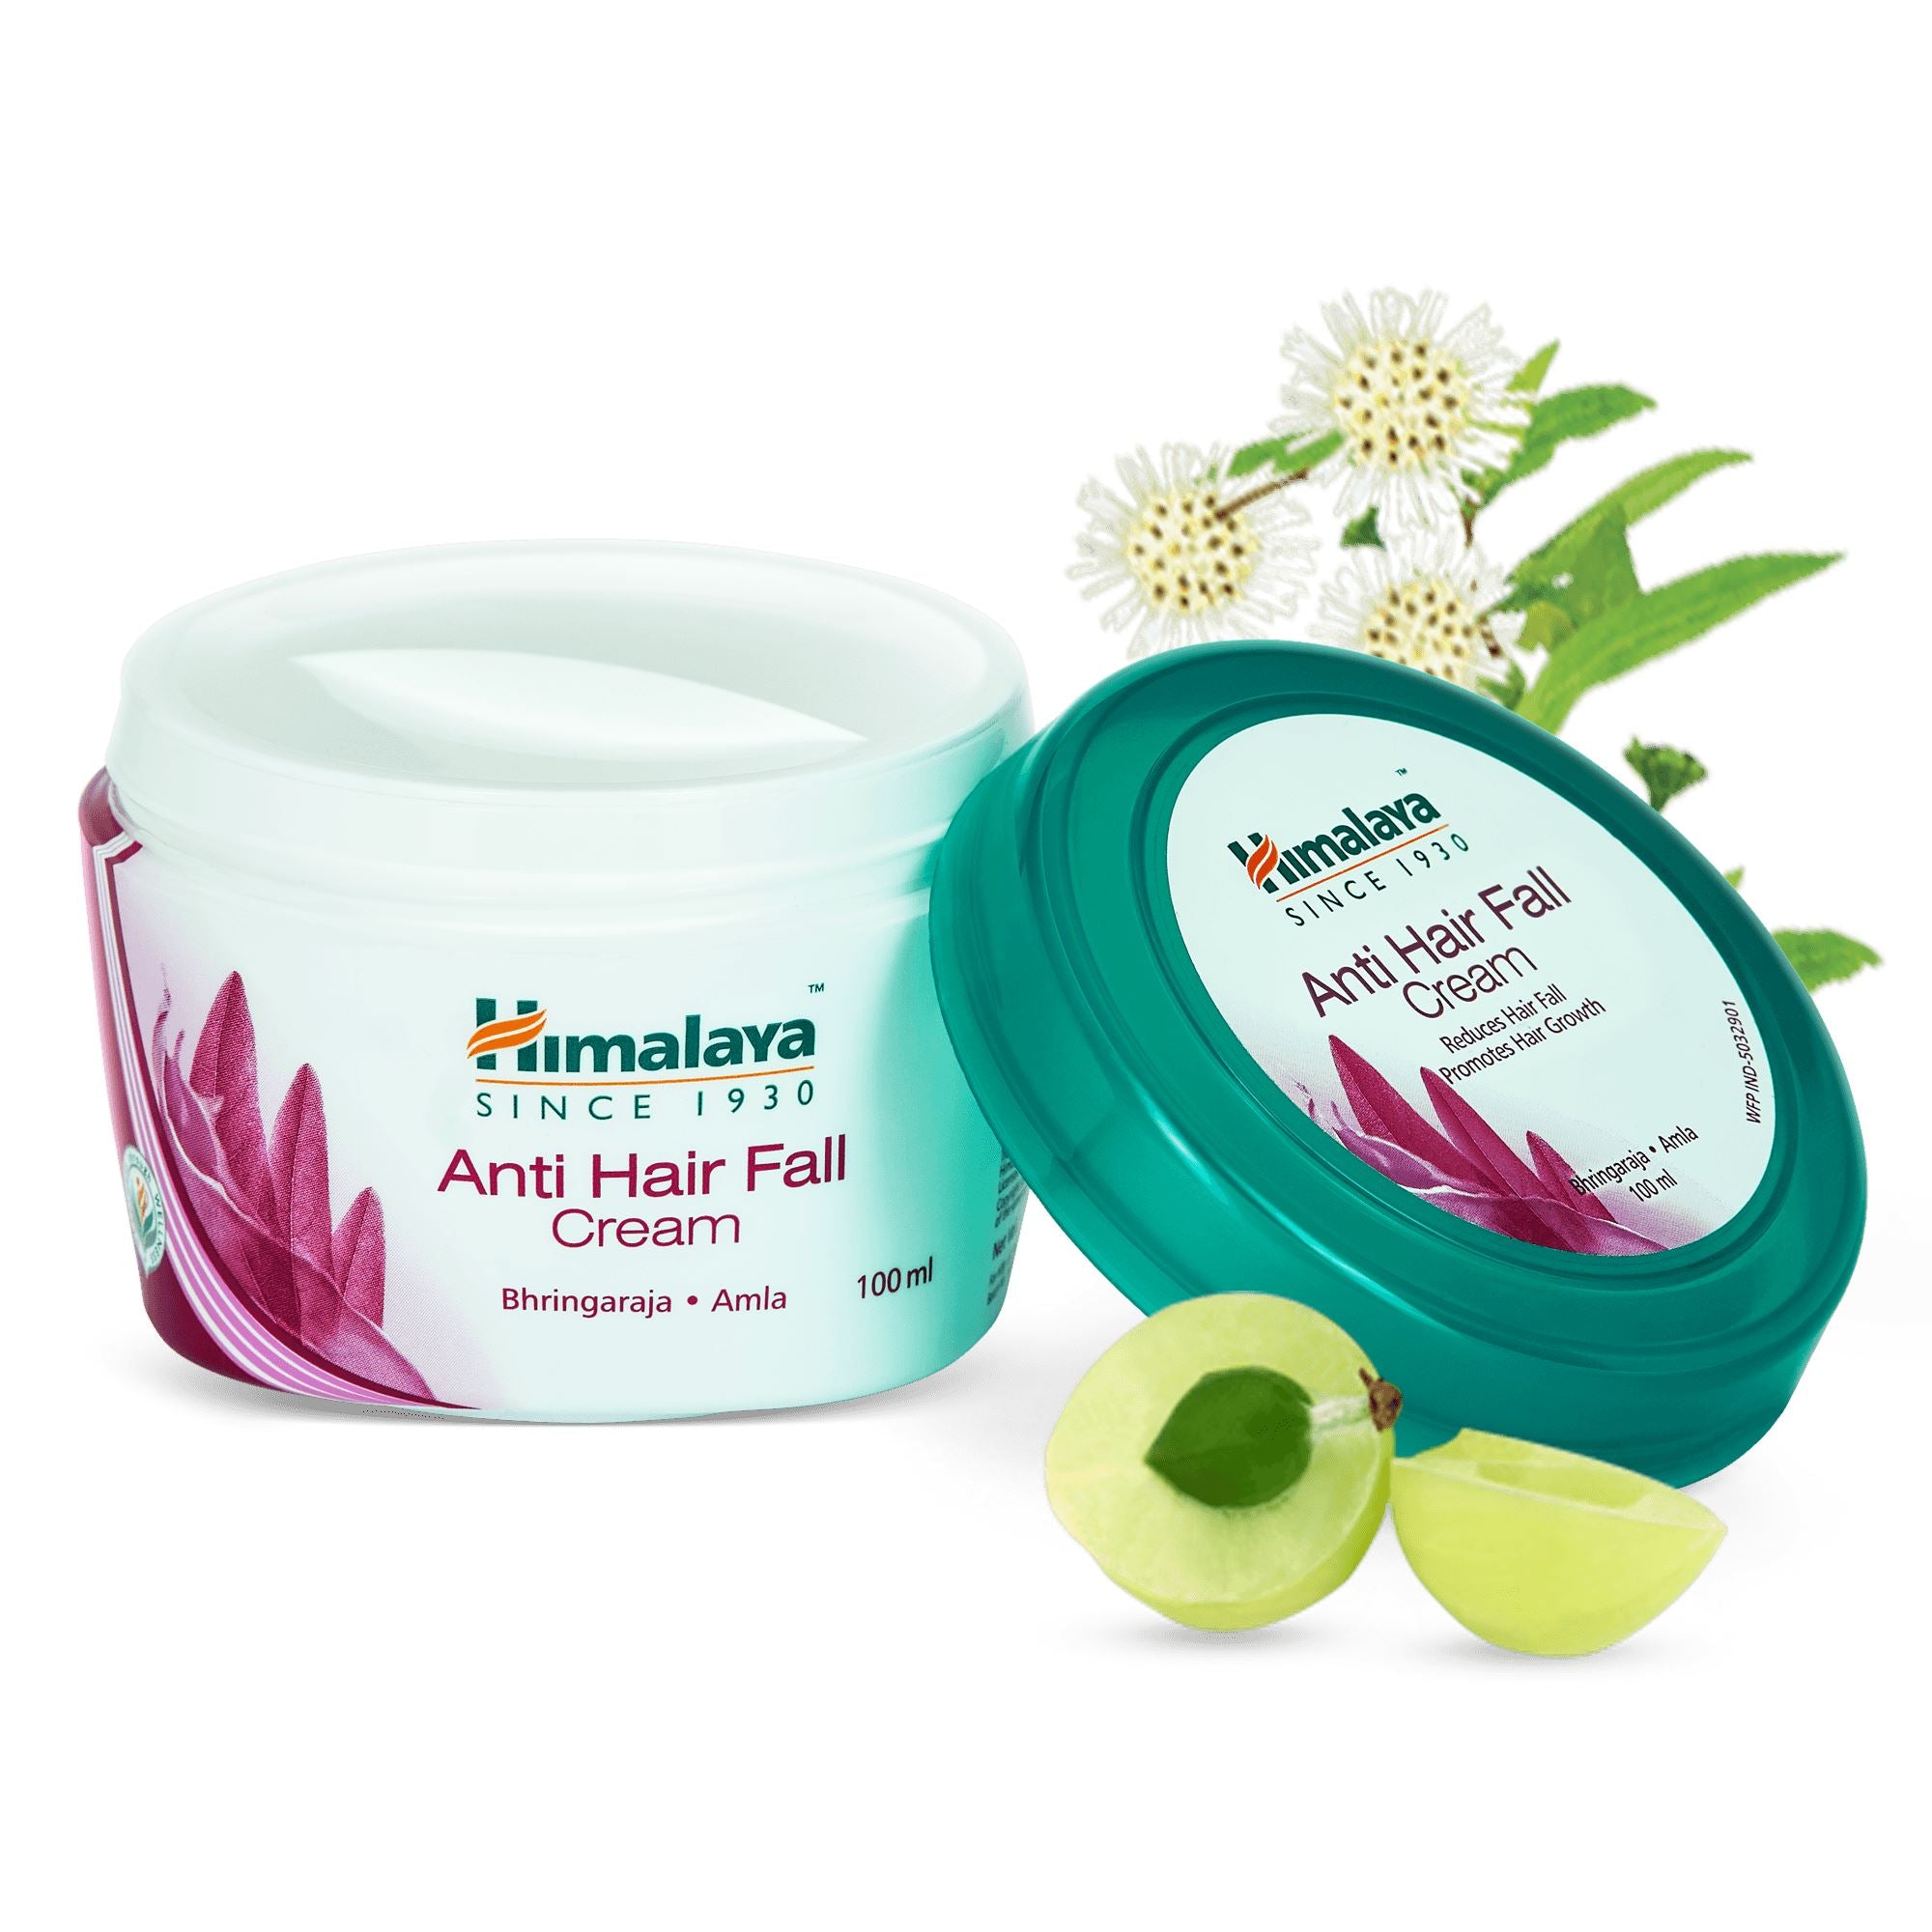 Himalaya Anti-Hair Fall Cream 100ml - Reduces hair fall and promotes hair growth